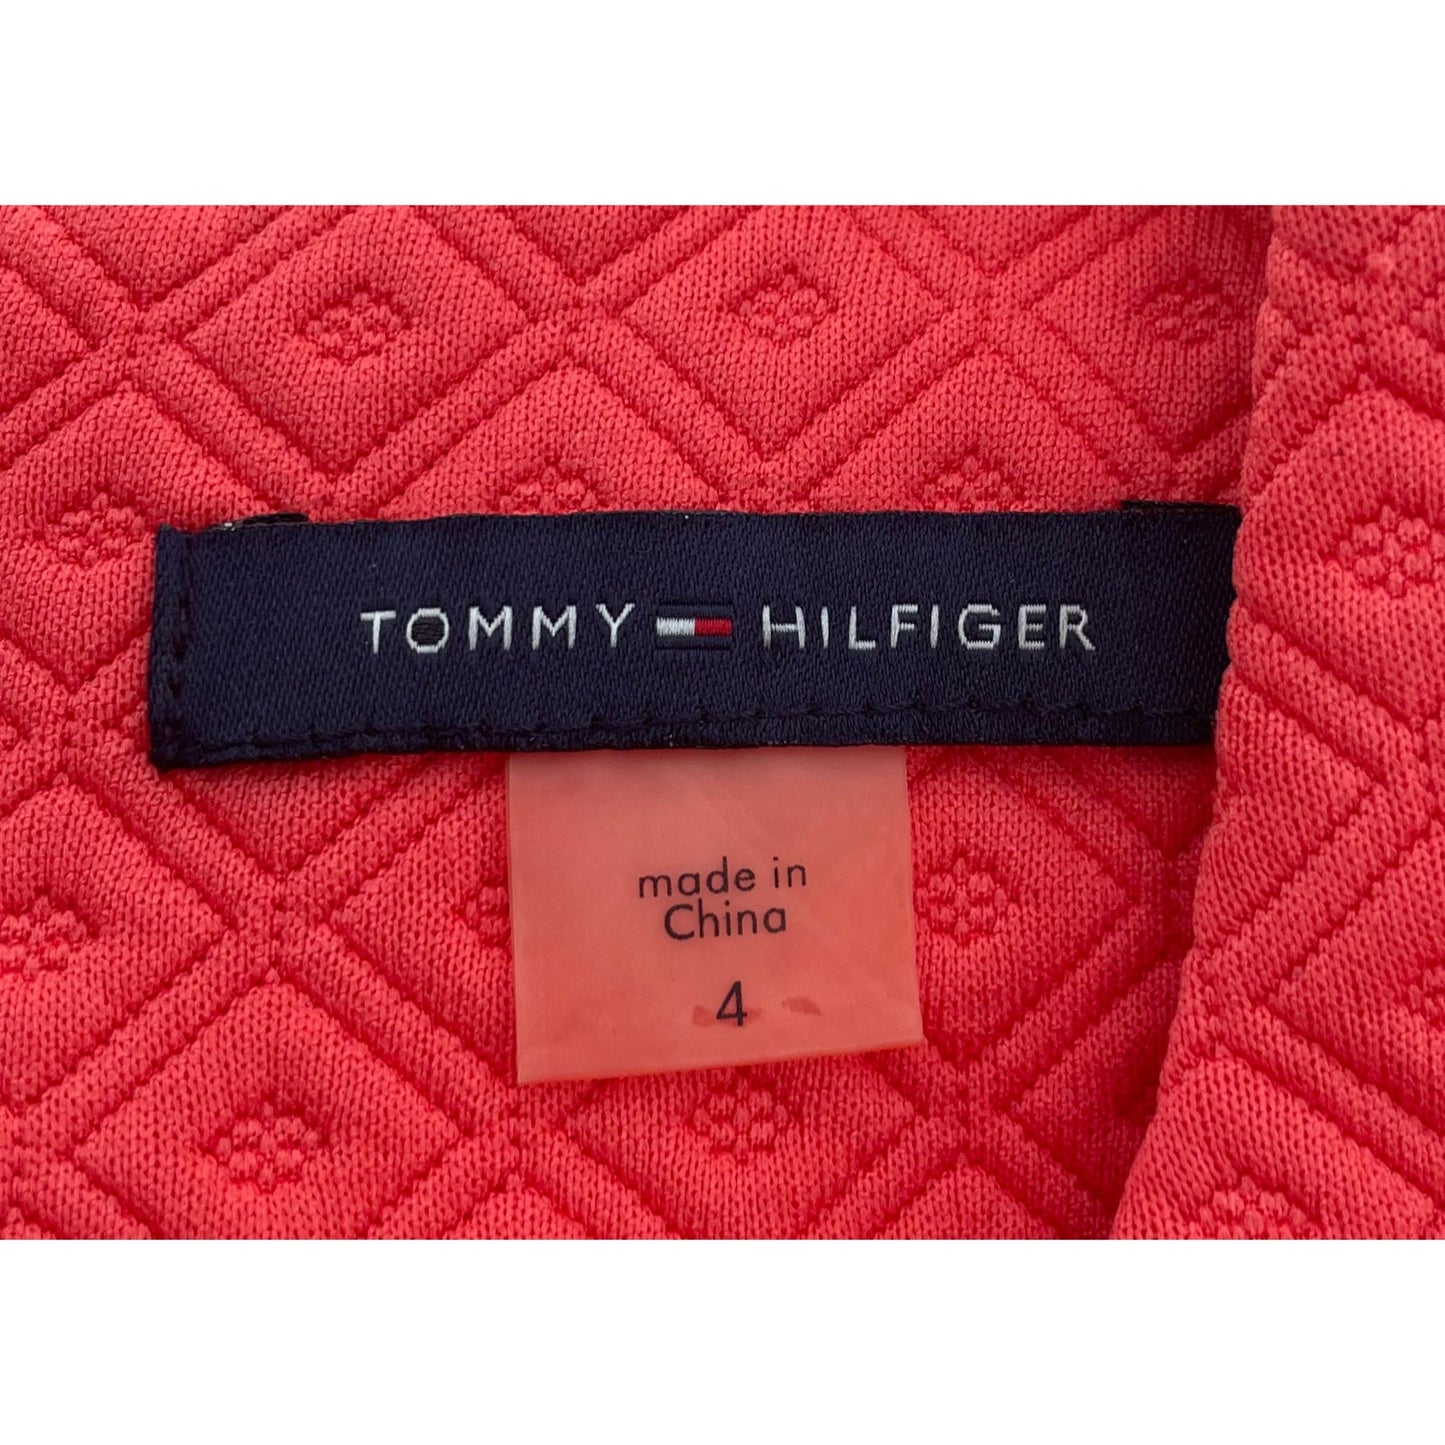 NWOT Tommy Hilfiger Women's Size 4 Coral Pink Sheath Tank Dress